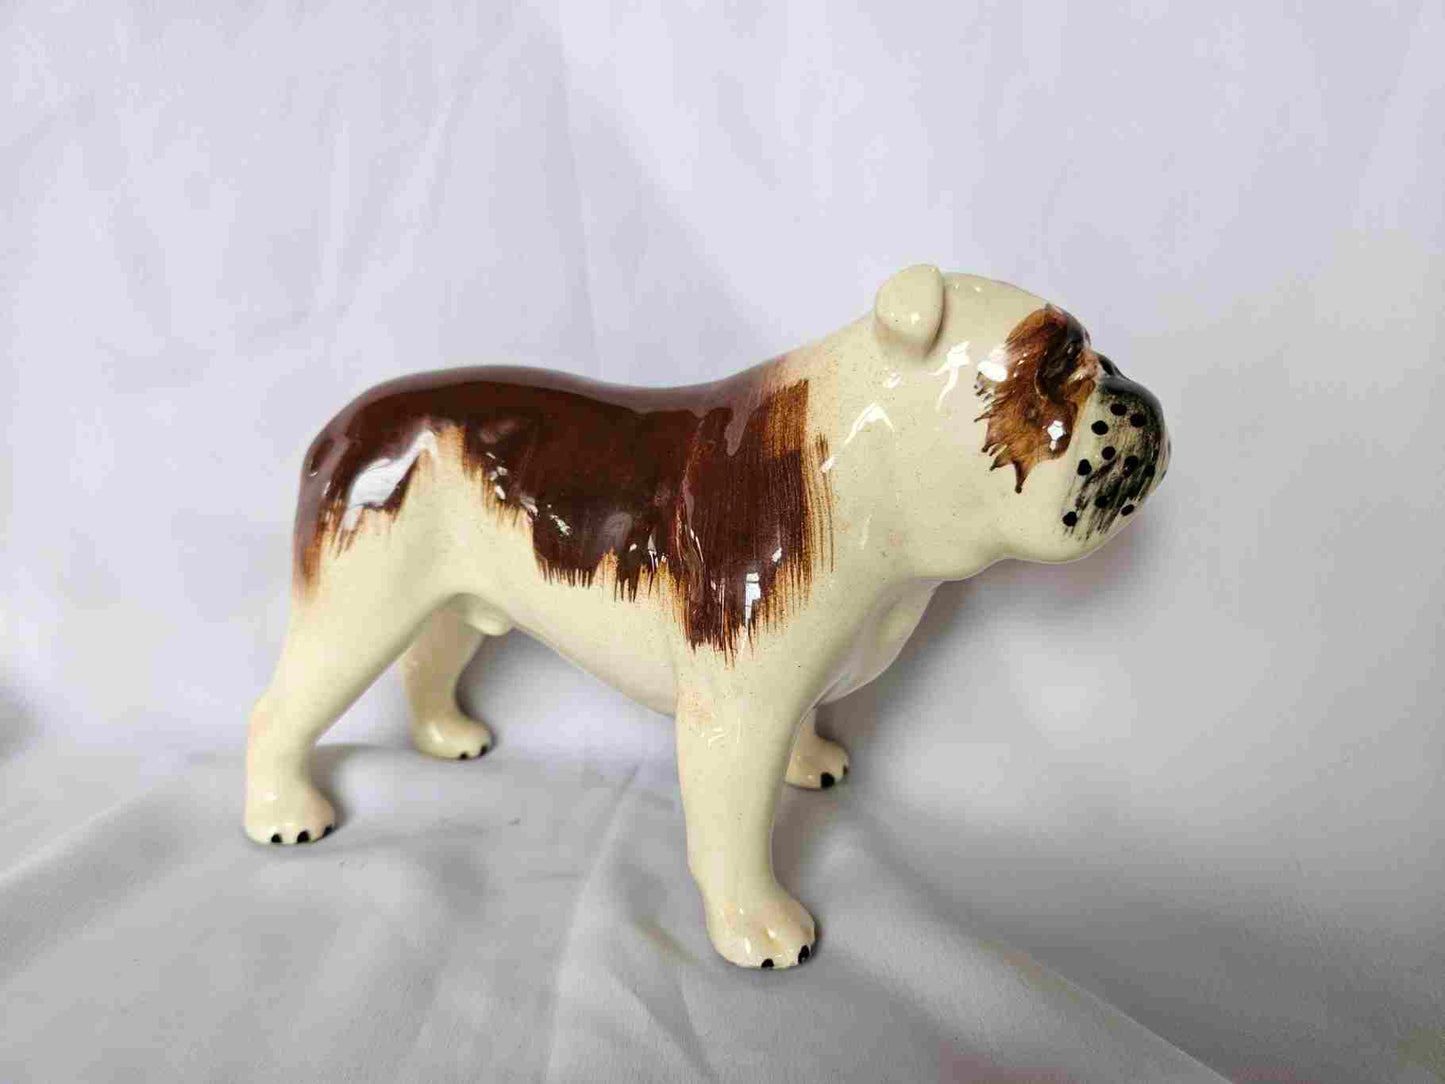 Bulldog figurine